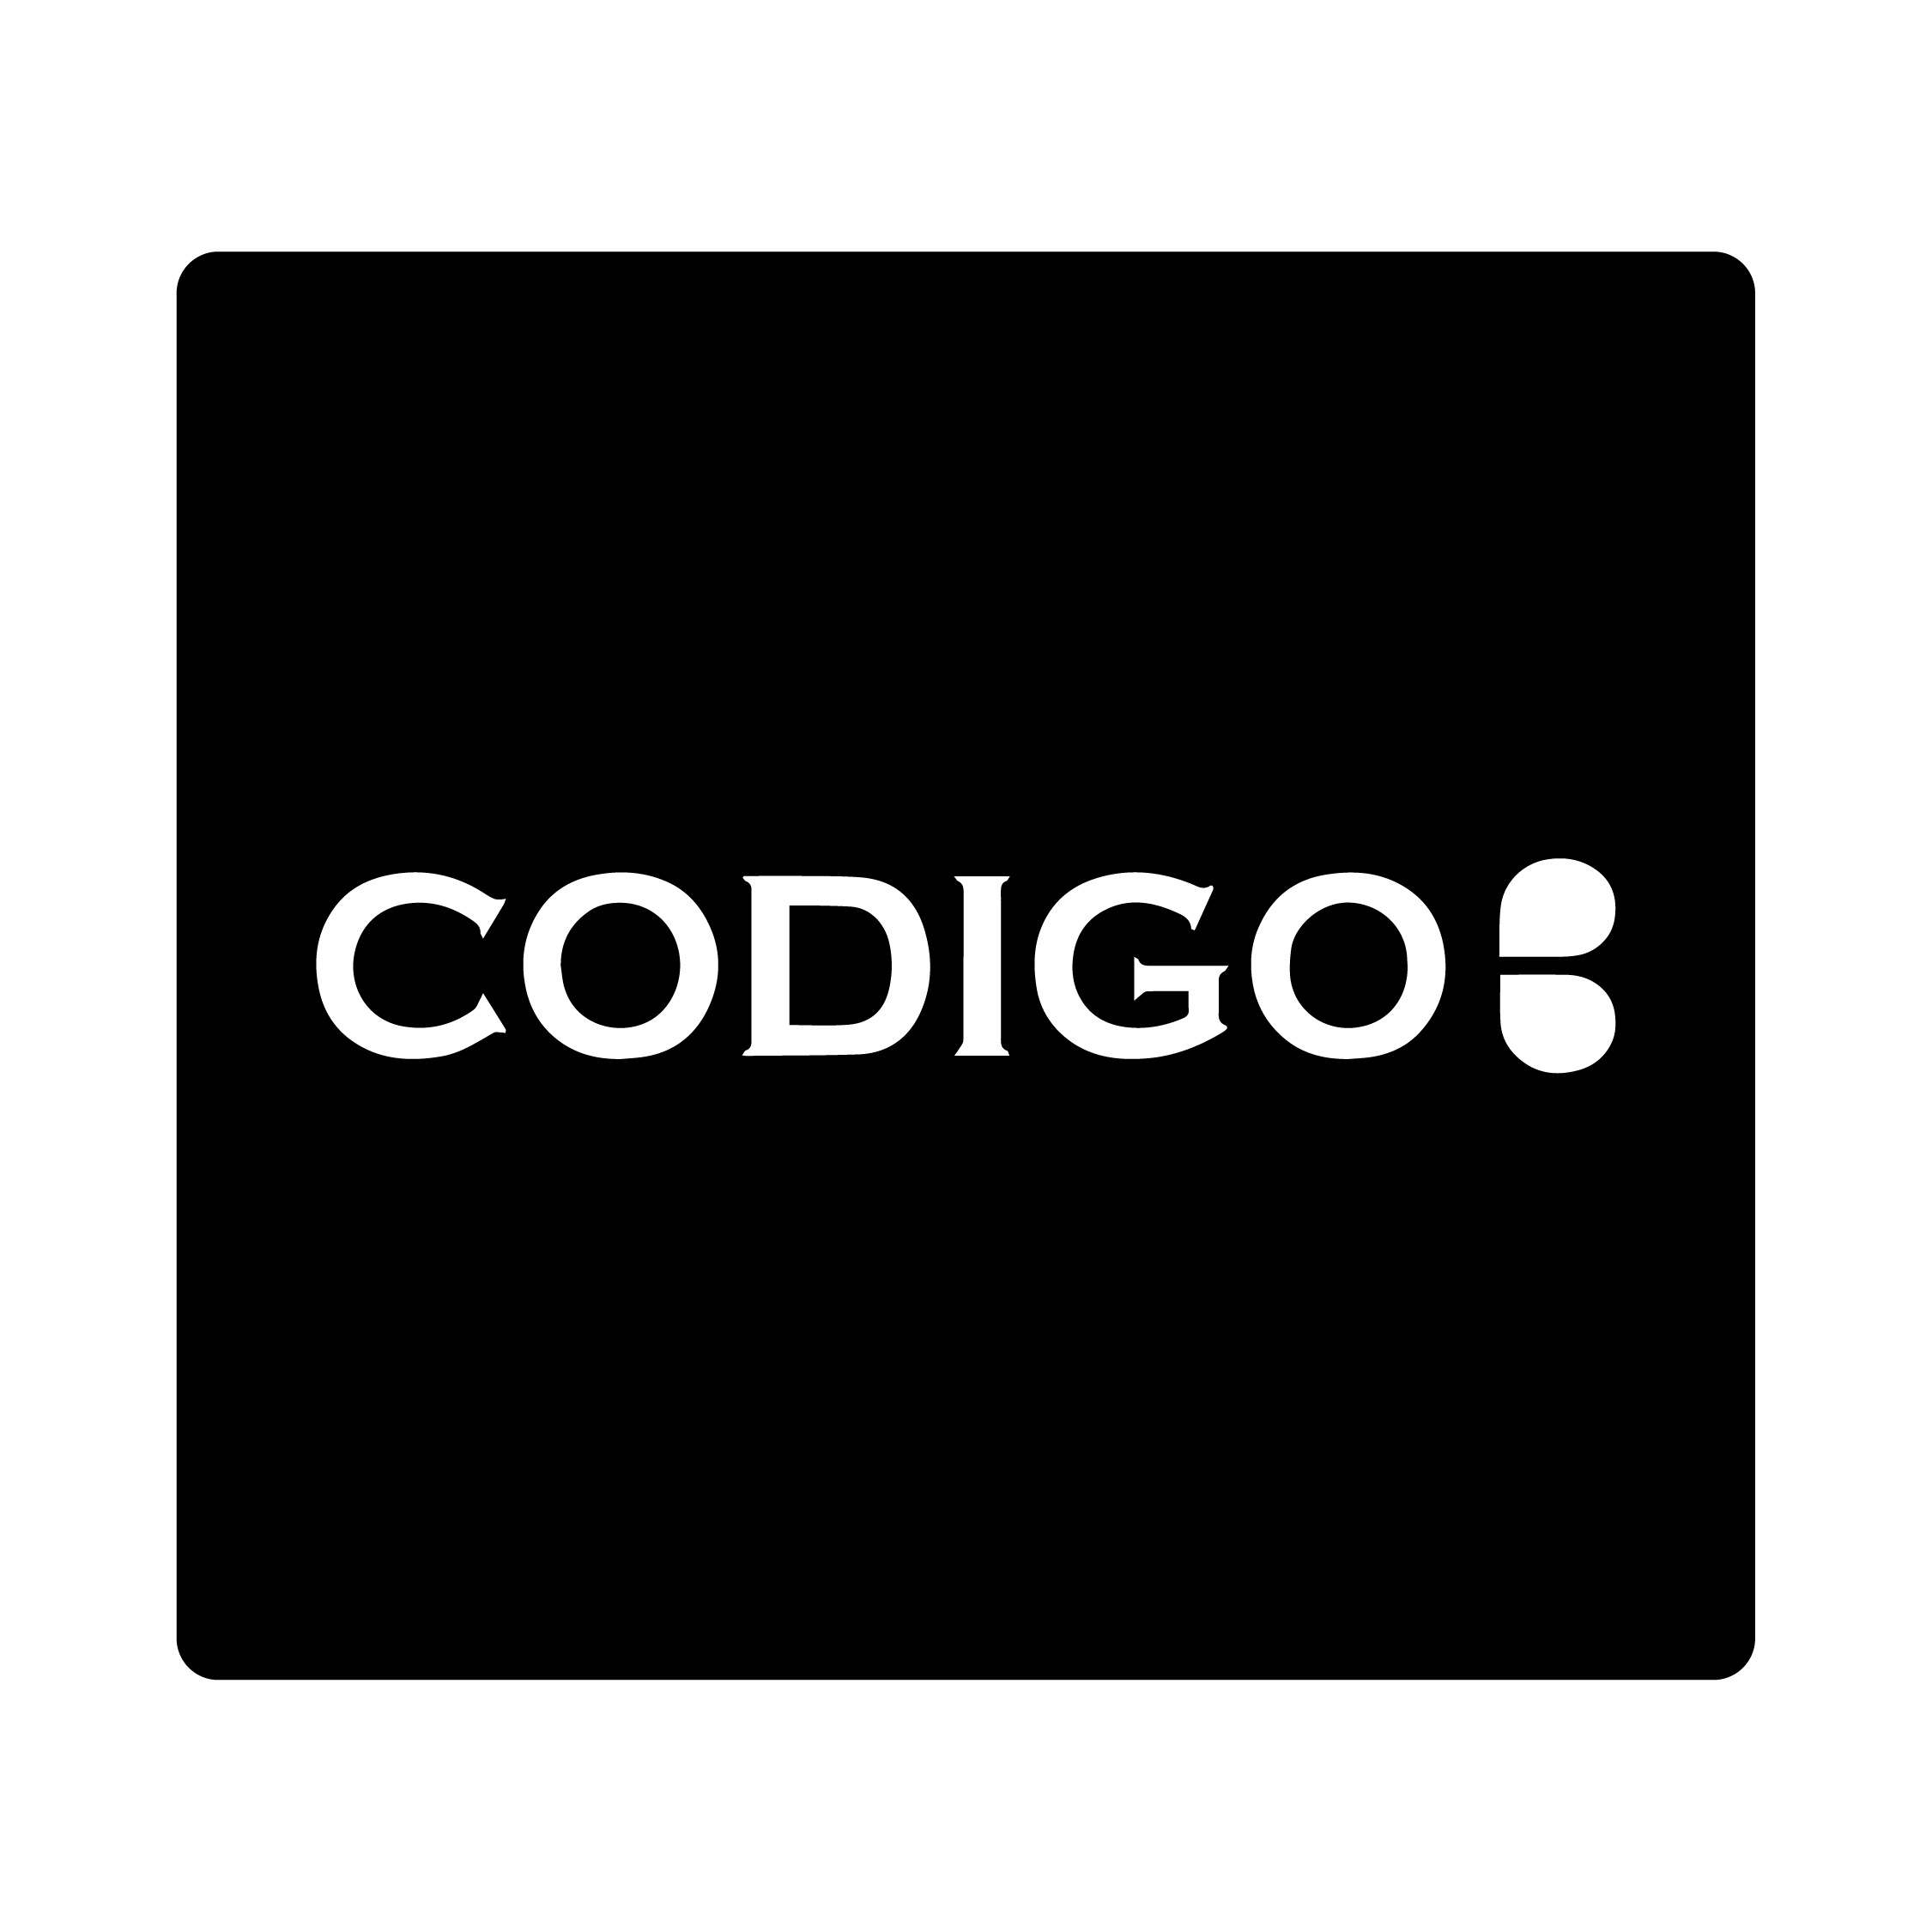 Codigo B